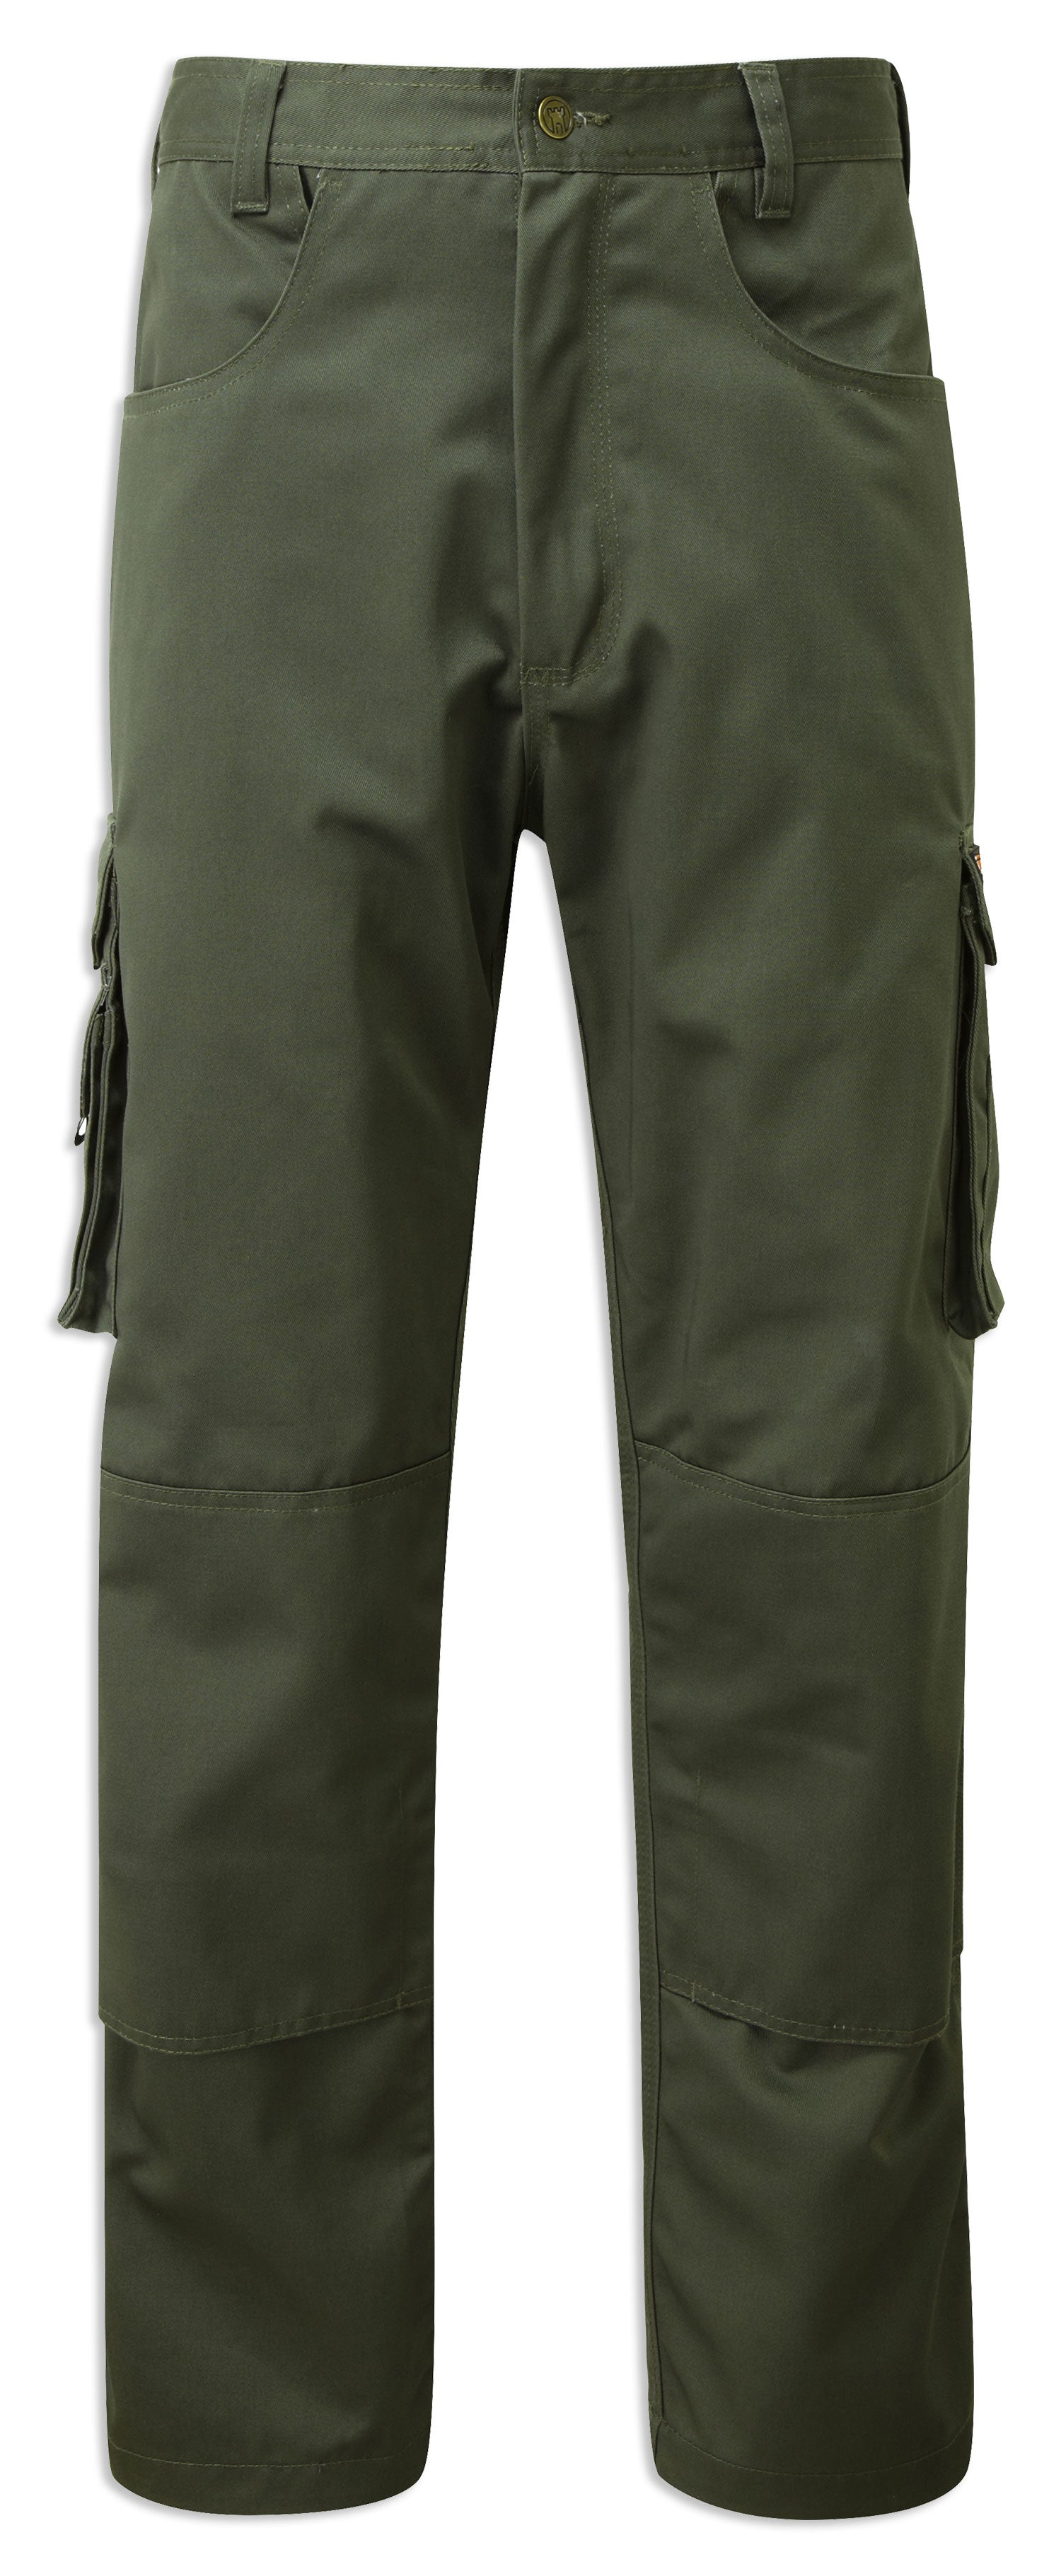 Green Multi pocket work trousers